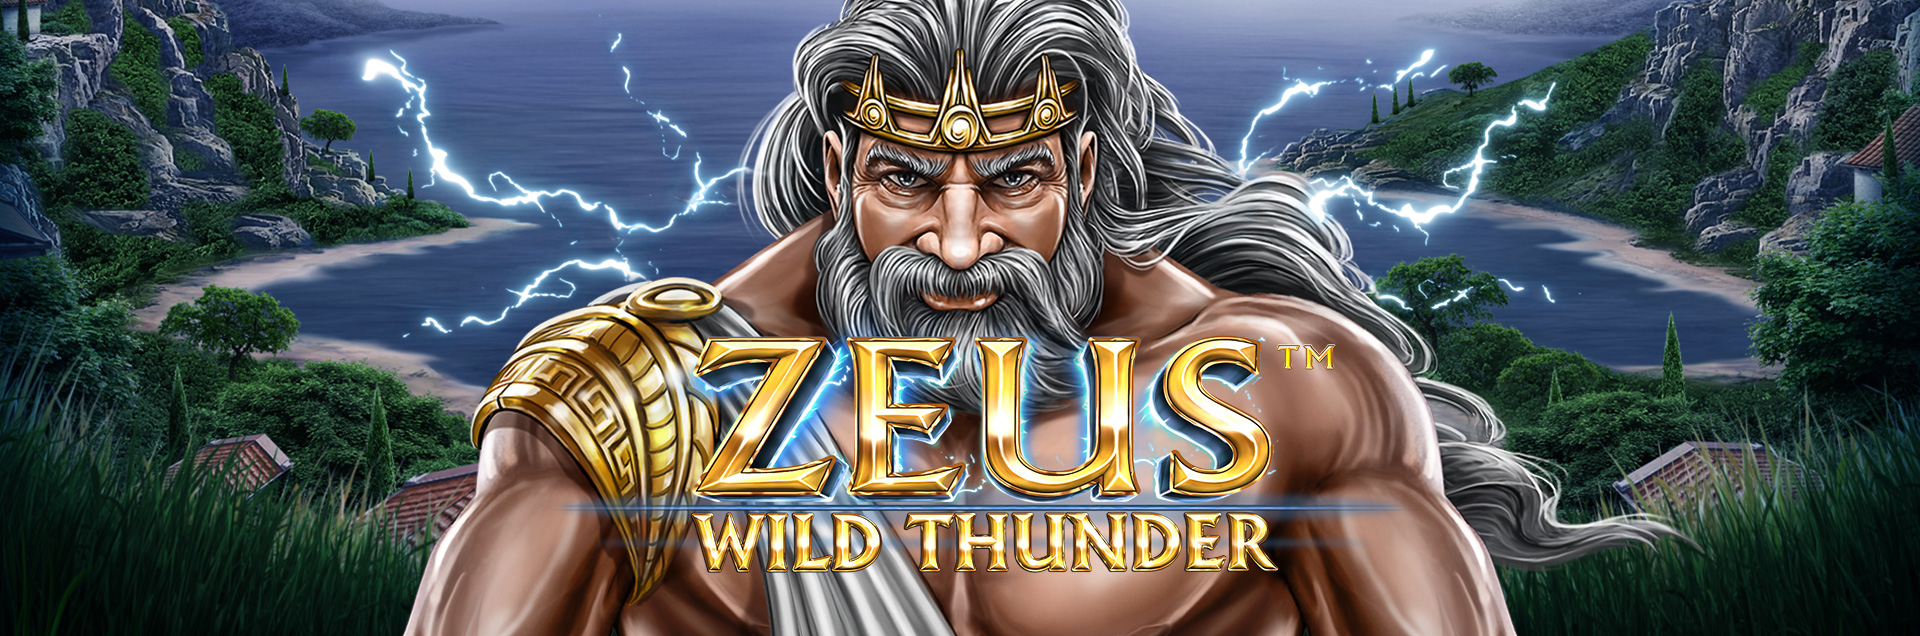 Zeus Wild Thunder big banner logo final